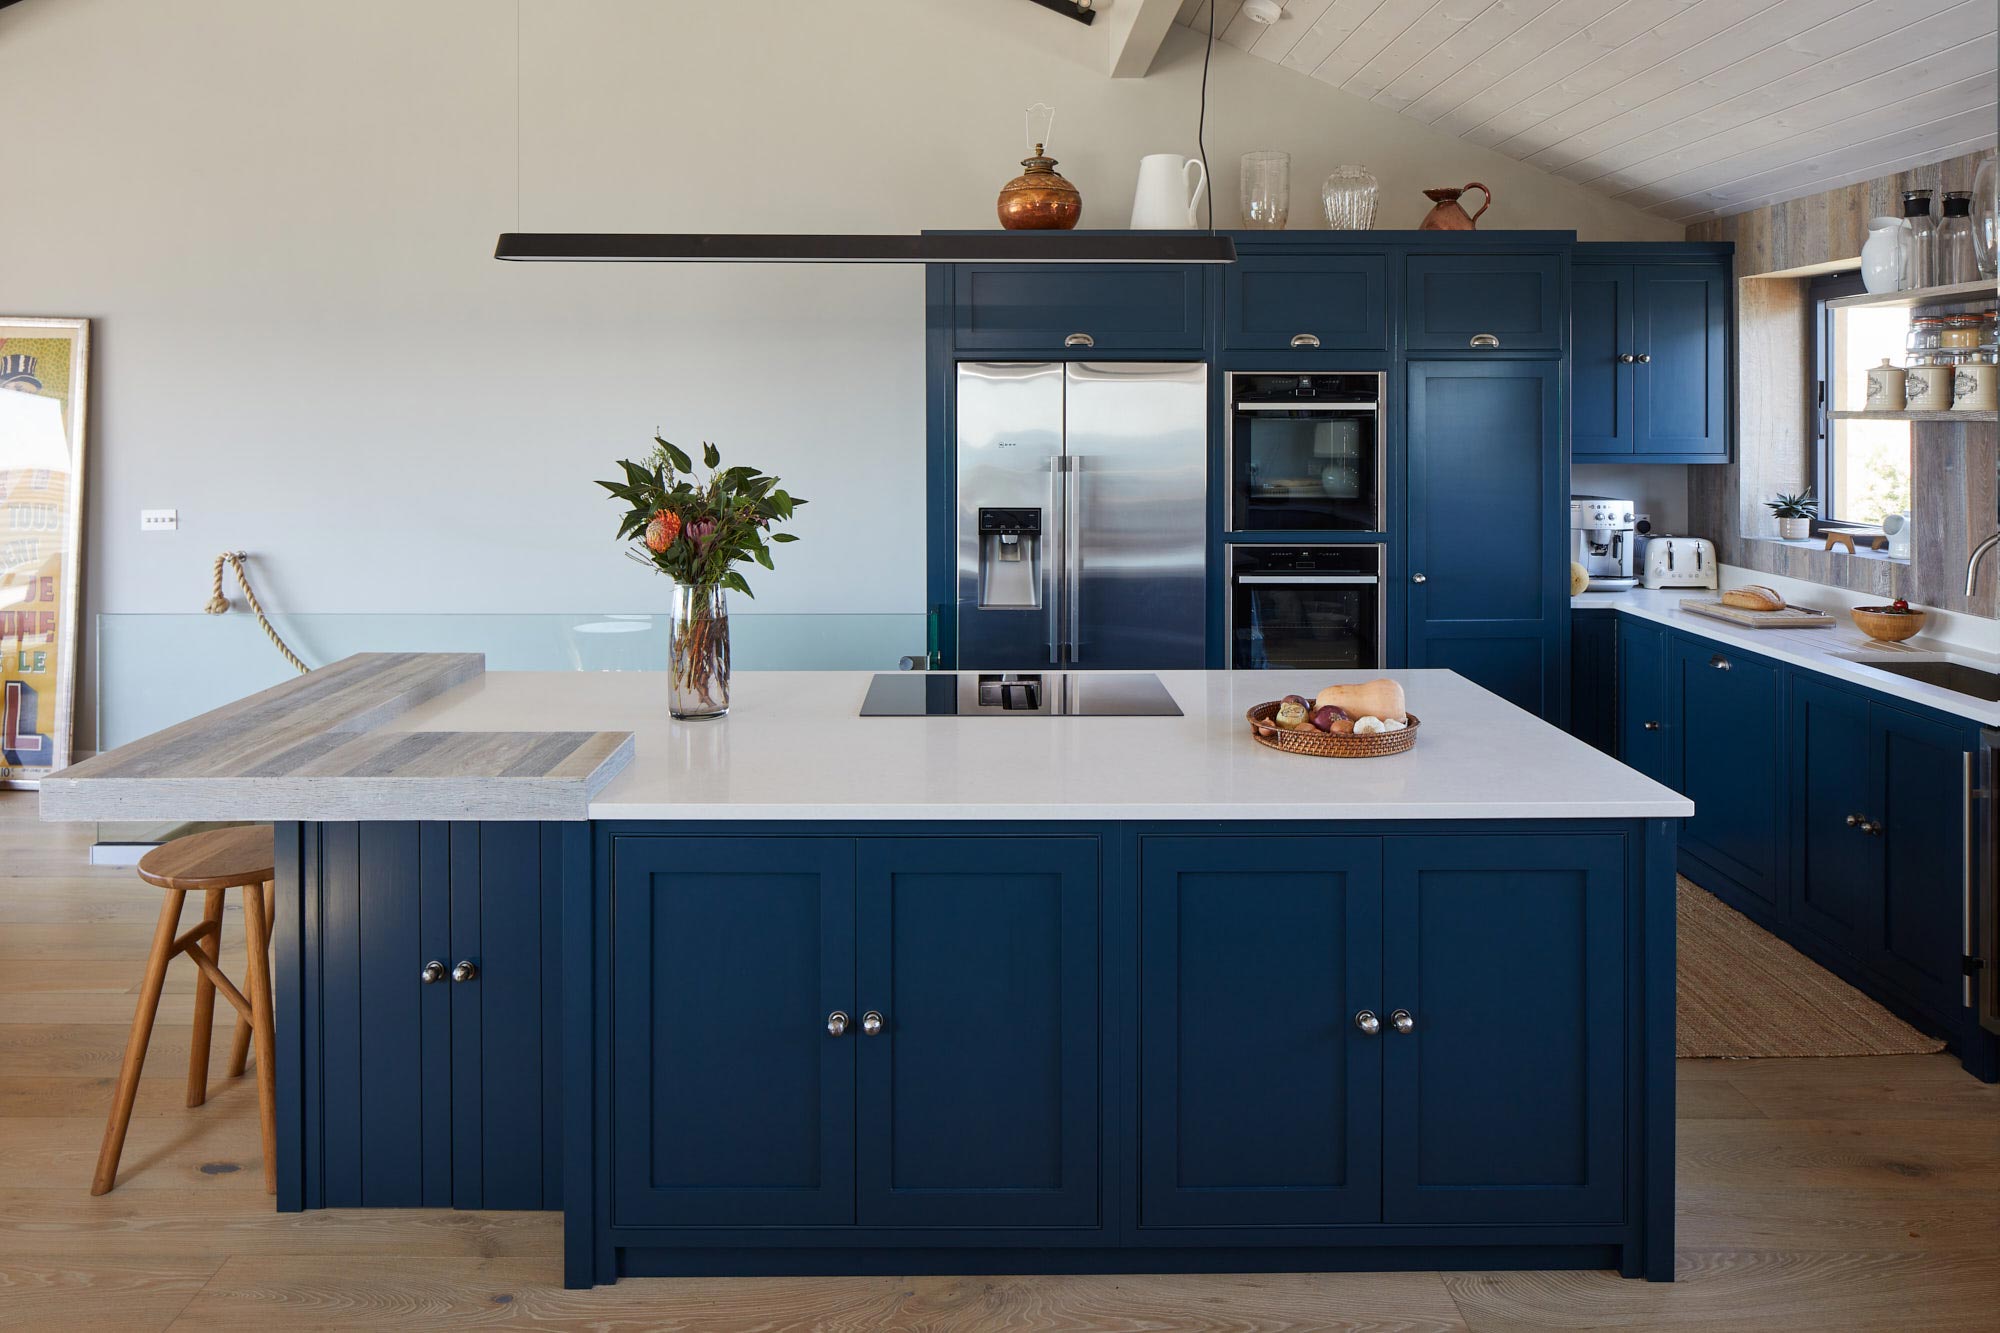 Large bespoke blue kitchen island